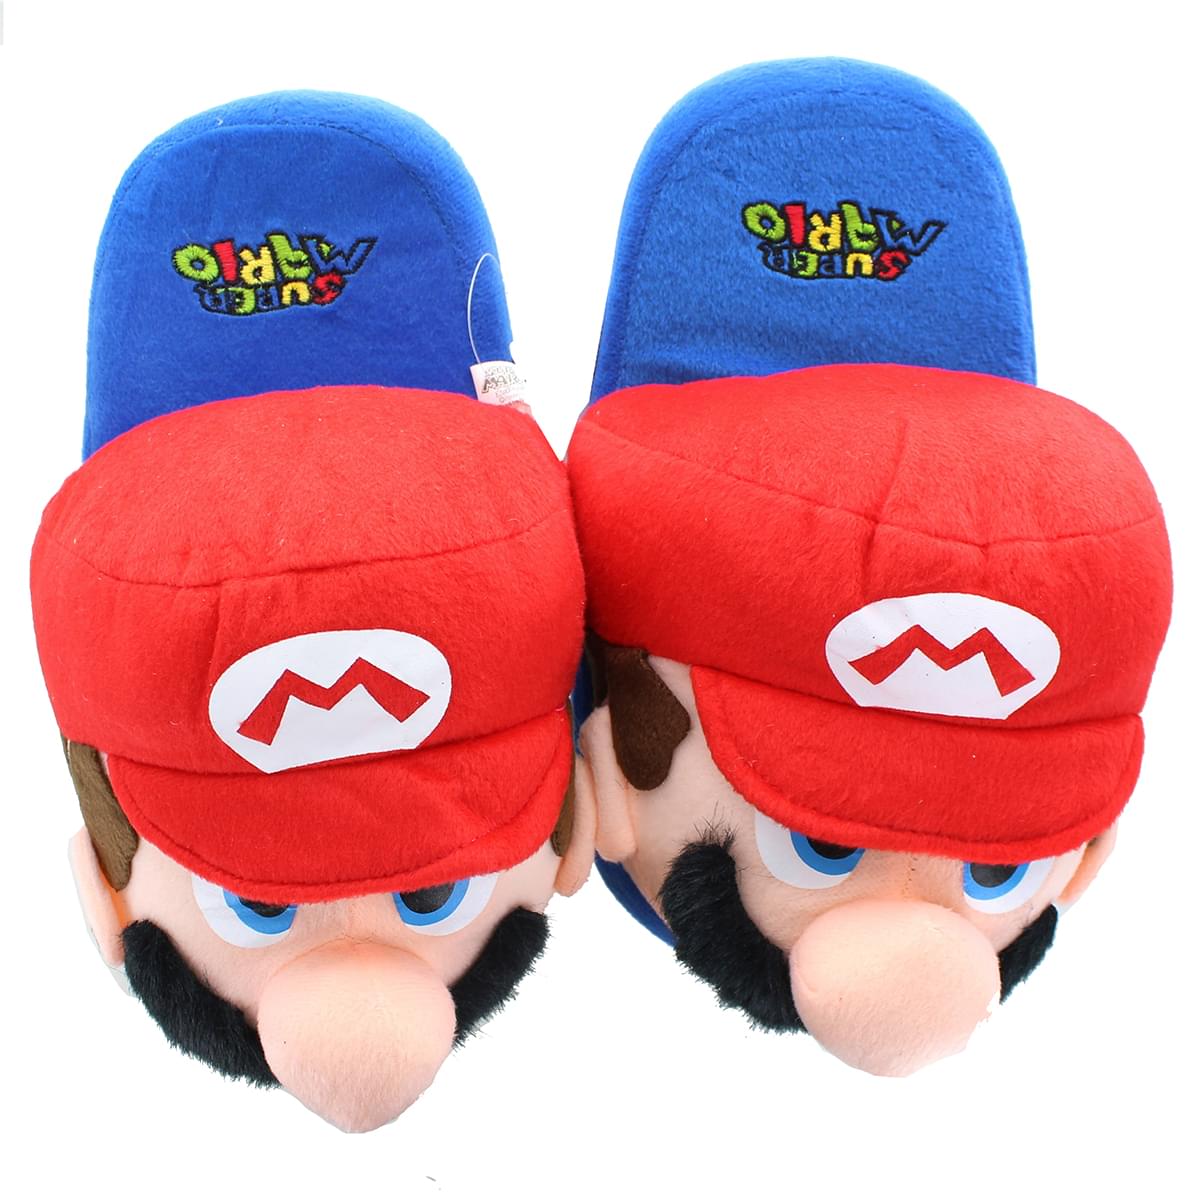 Super Mario Bros. Mario Youth Size Plush Slippers